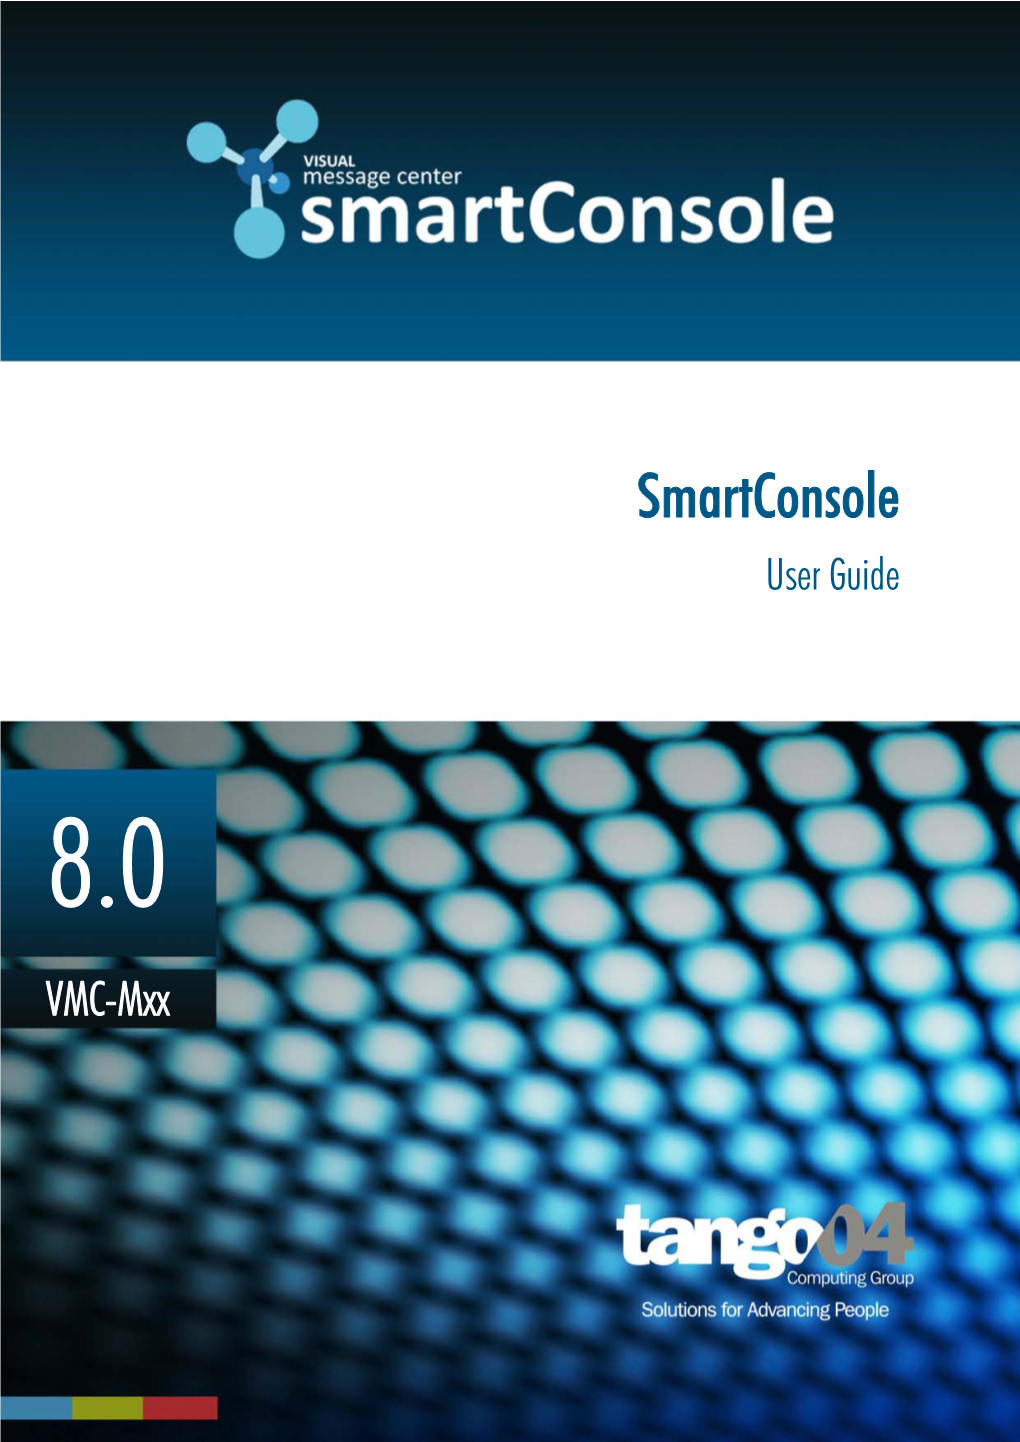 VISUAL Message Center Smartconsole User Guide